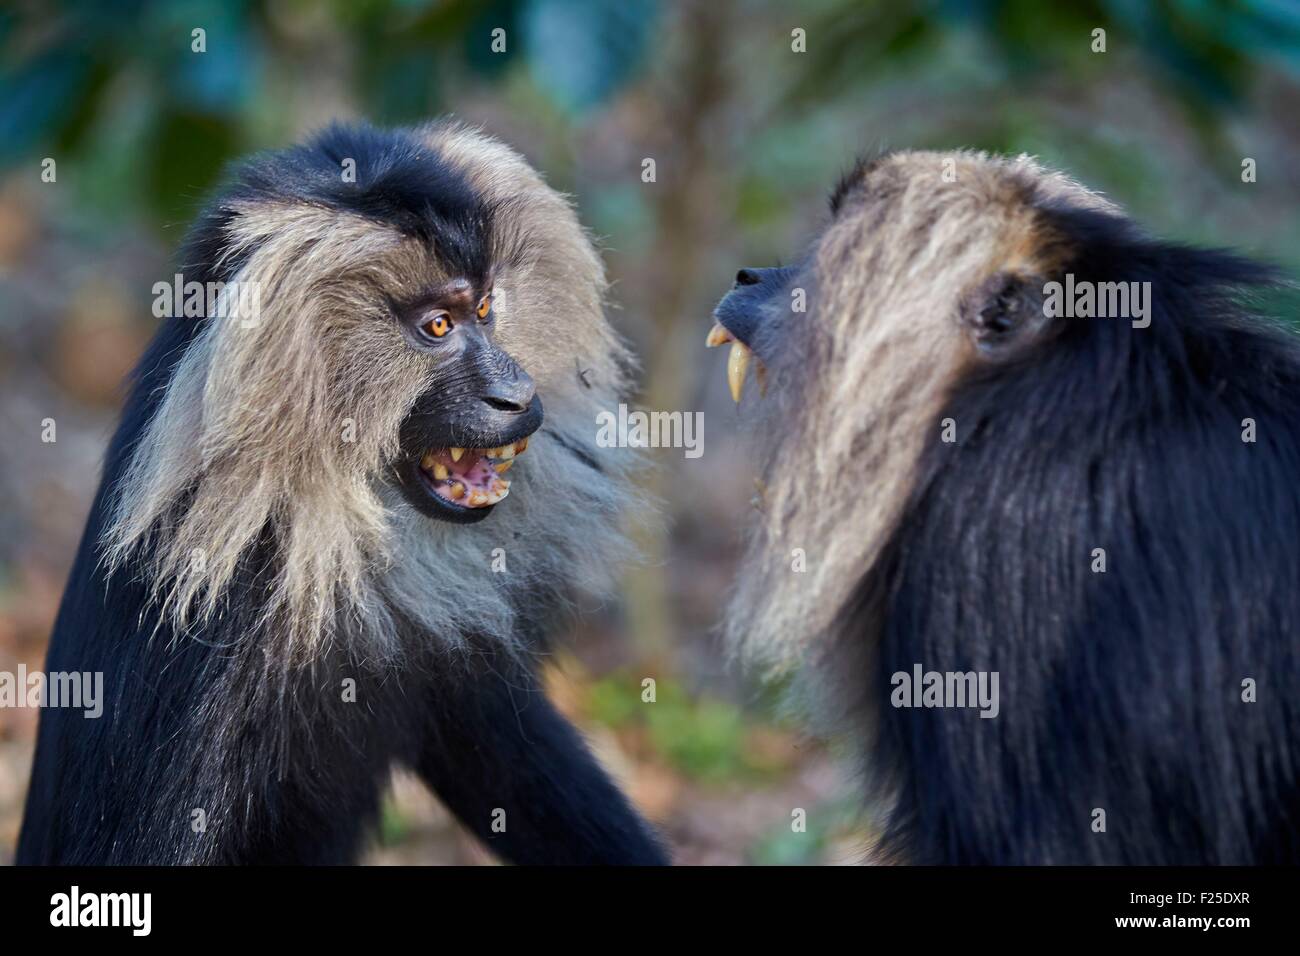 India, Tamil Nadu state, Anaimalai Mountain Range (Nilgiri hills), Lion-tailed macaque (Macaca silenus), or the Wanderoo, The lion-tailed macaque ranks among the rarest and most threatened primates, adult male dominant, aggressive posture Stock Photo